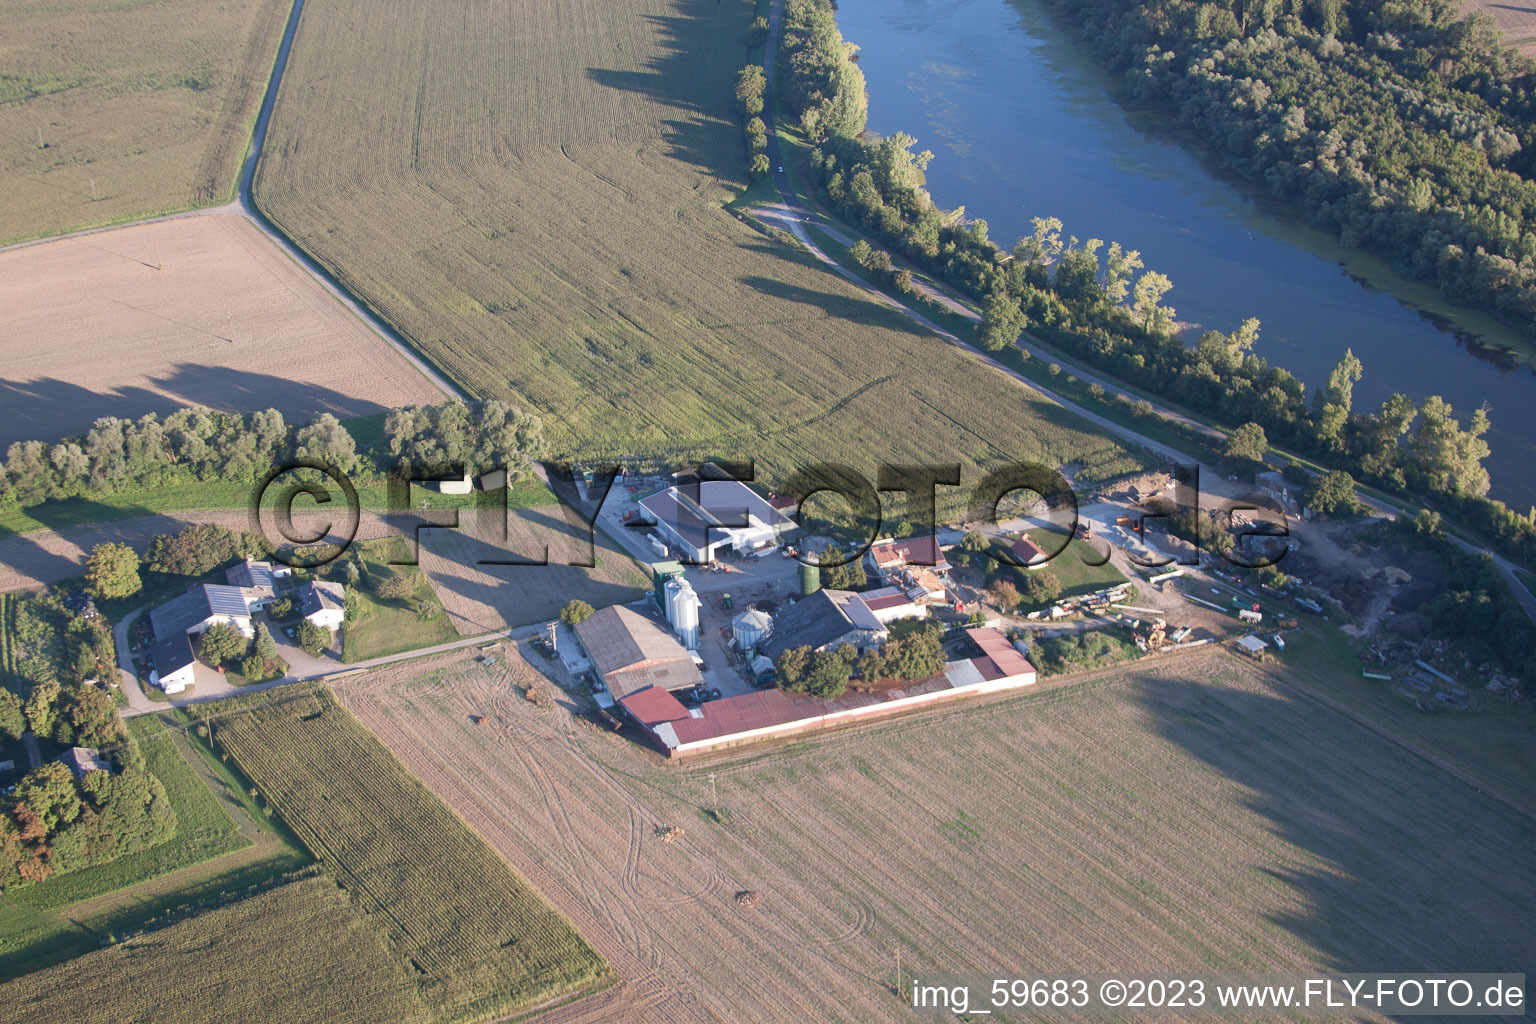 Drone image of District Rheinsheim in Philippsburg in the state Baden-Wuerttemberg, Germany